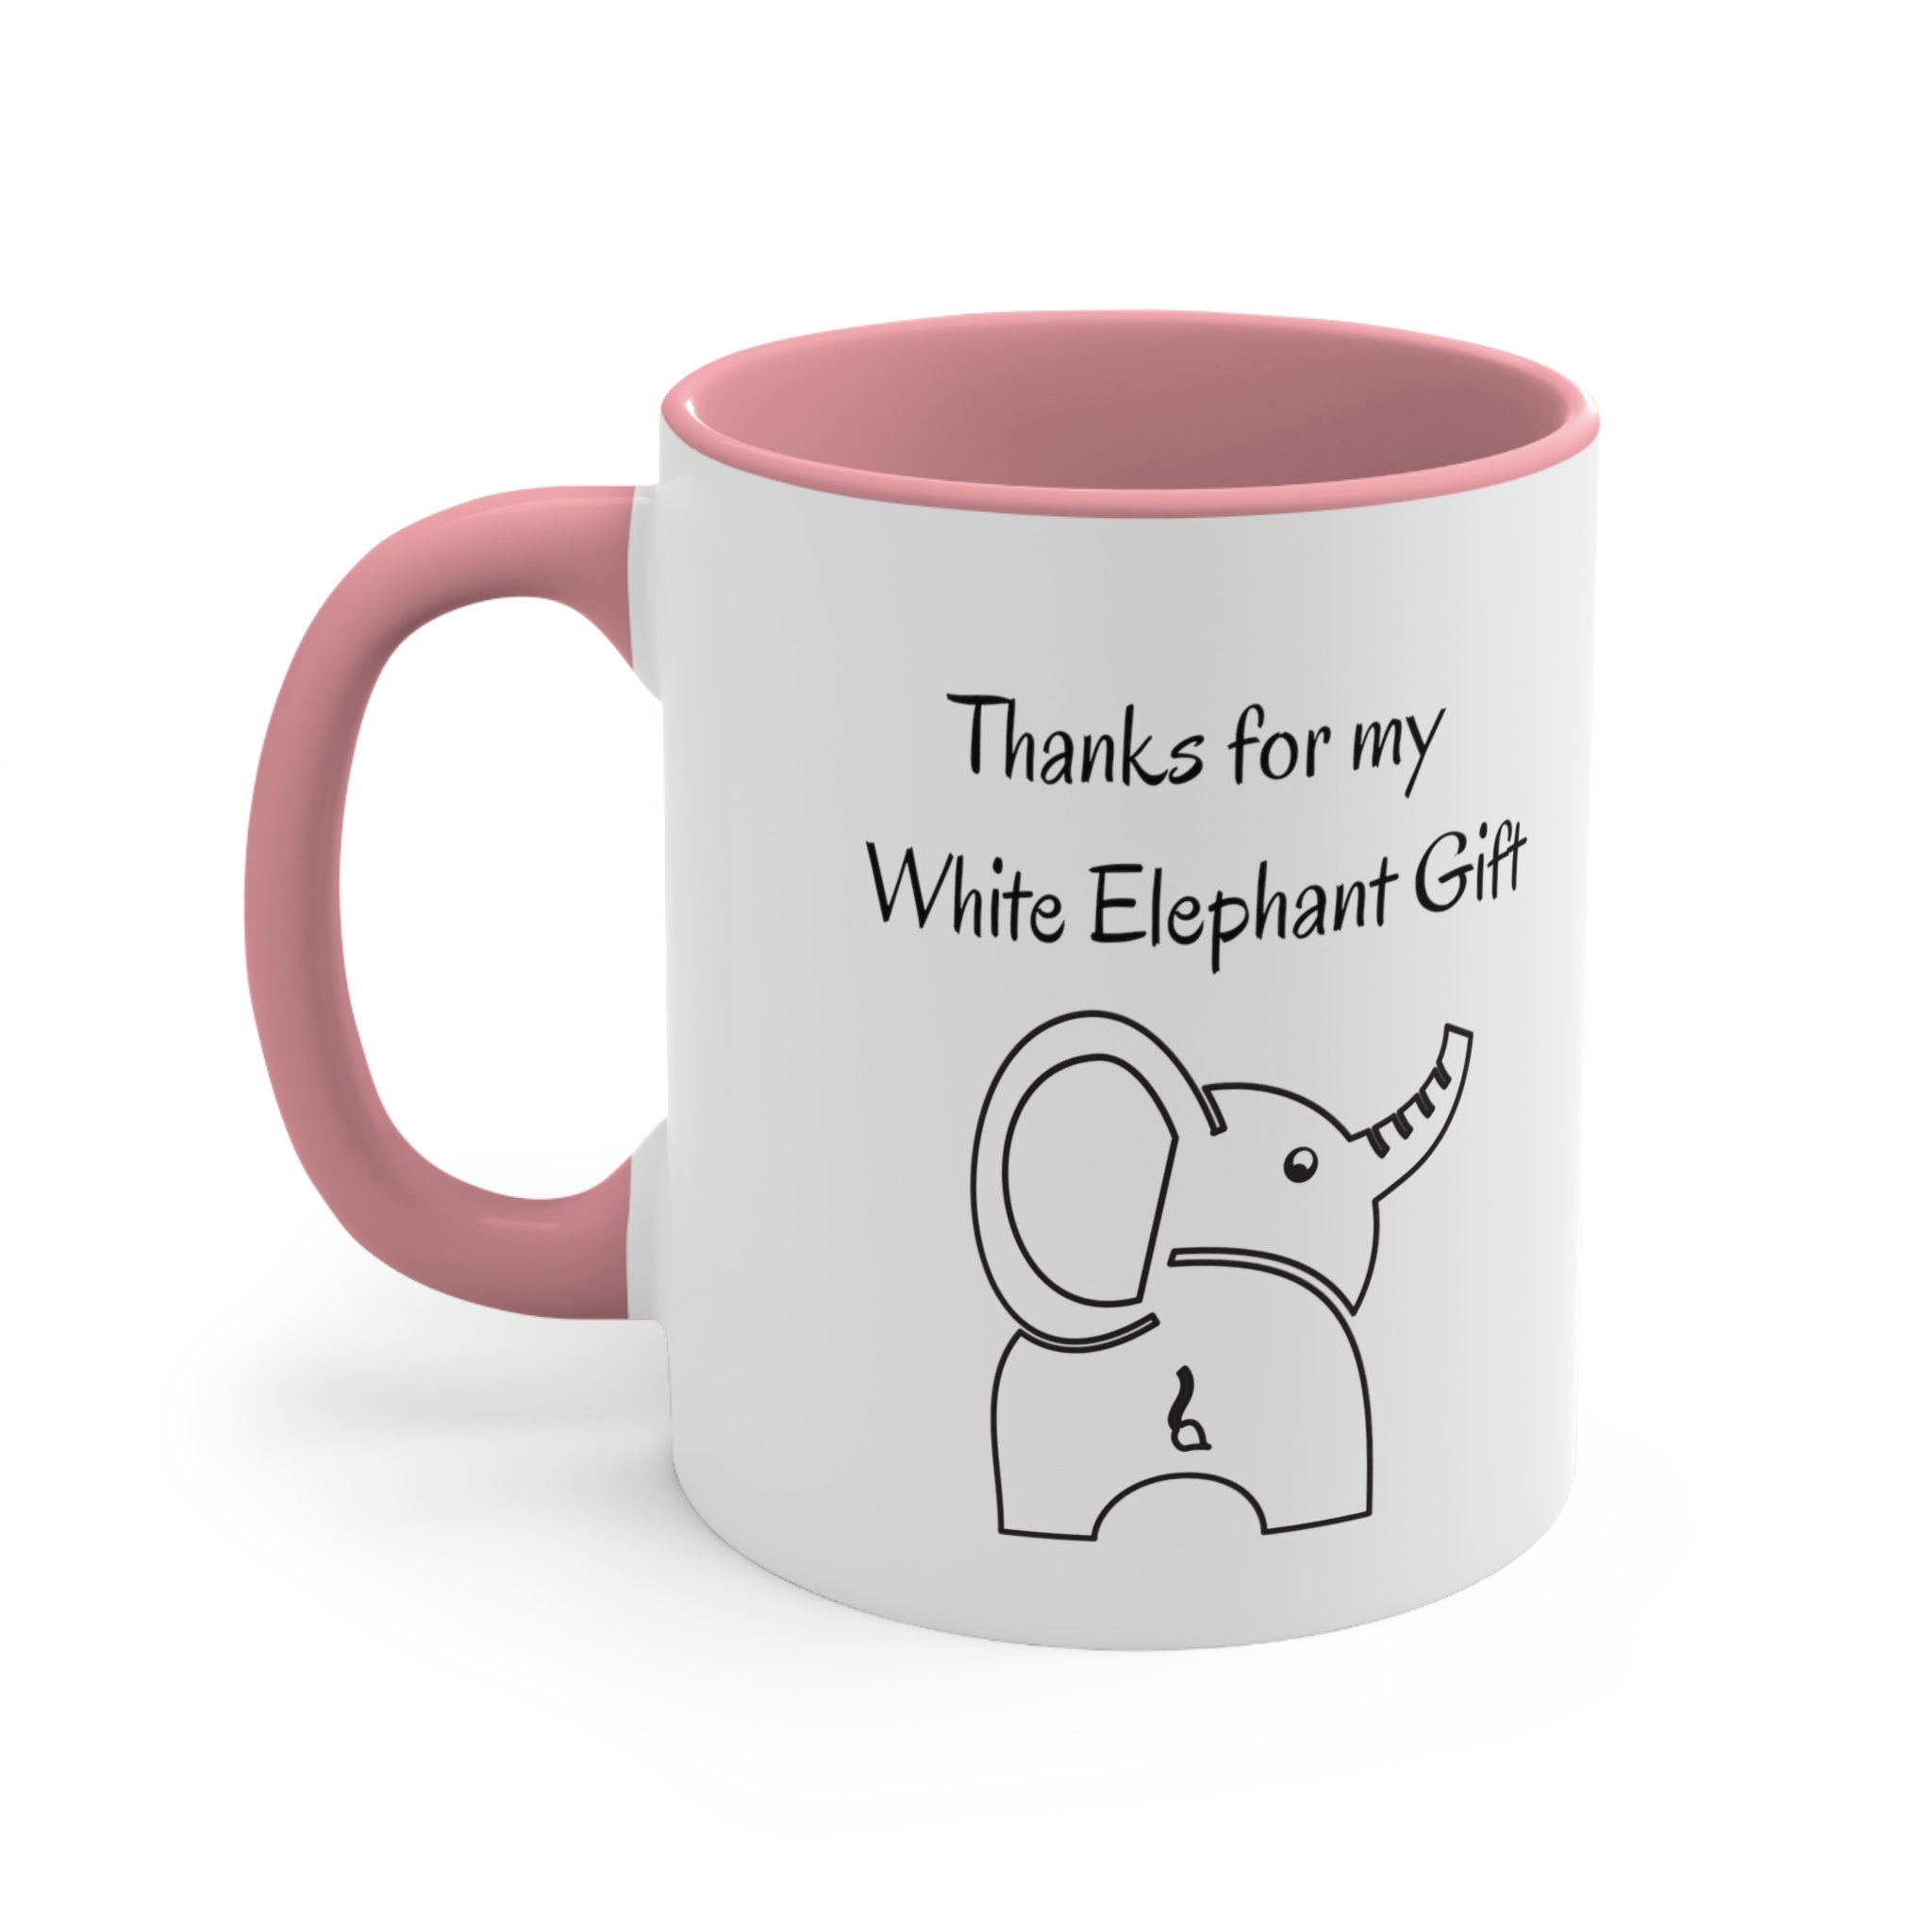 Best White Elephant Gift Ever Coffee Mug - White Elephant Coffee